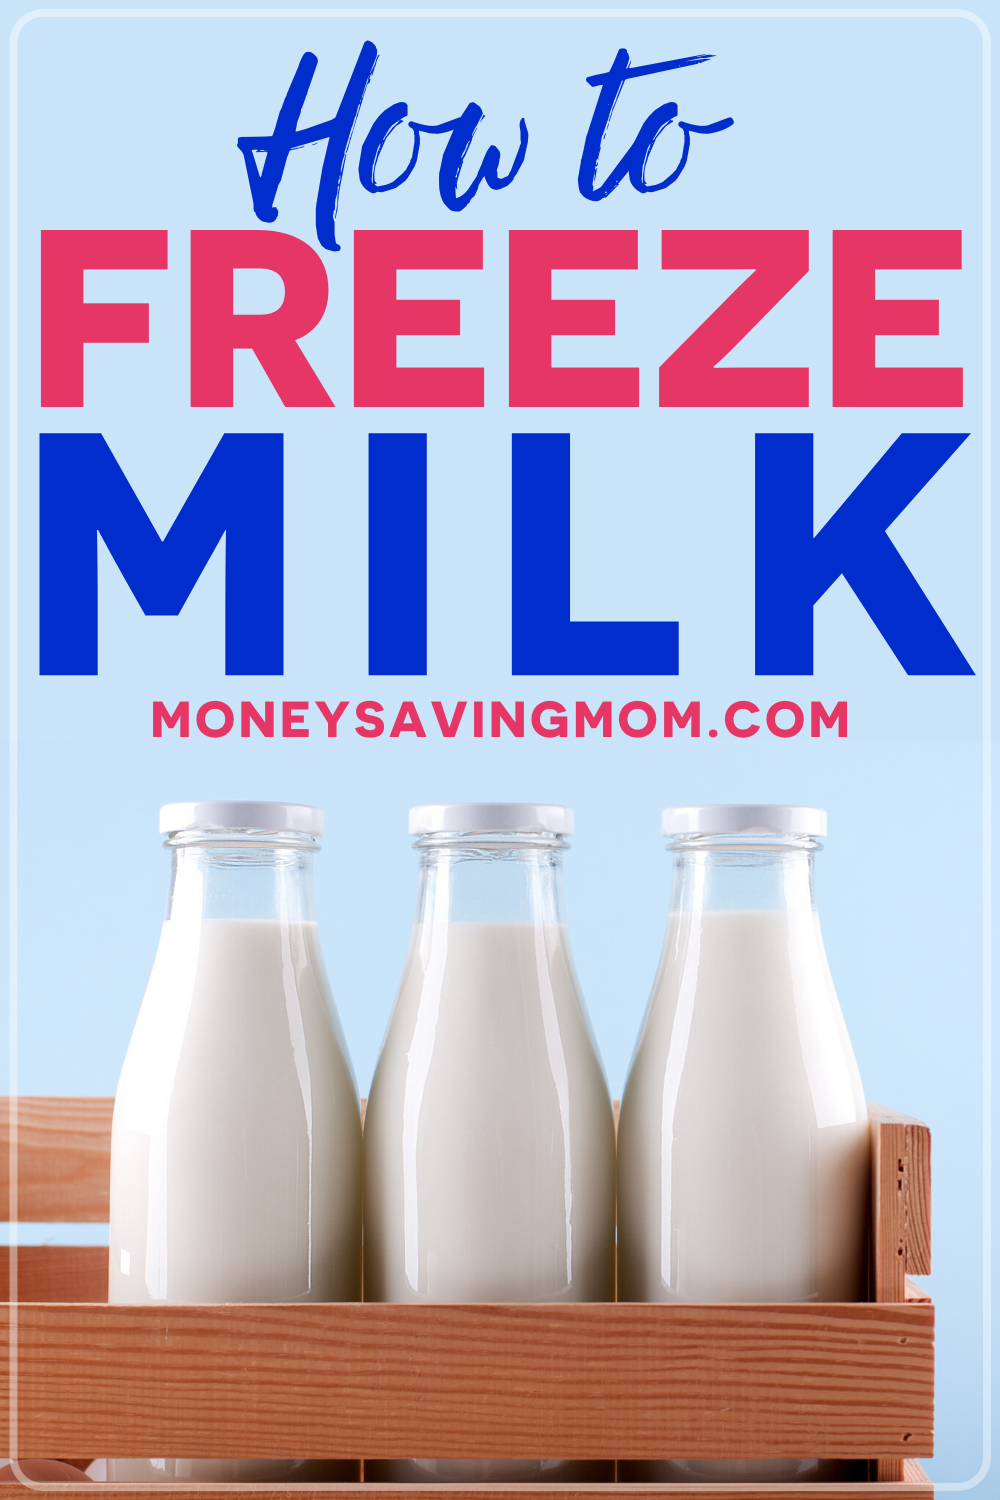 https://moneysavingmom.com/wp-content/uploads/2012/01/Freeze-Milk-1.png